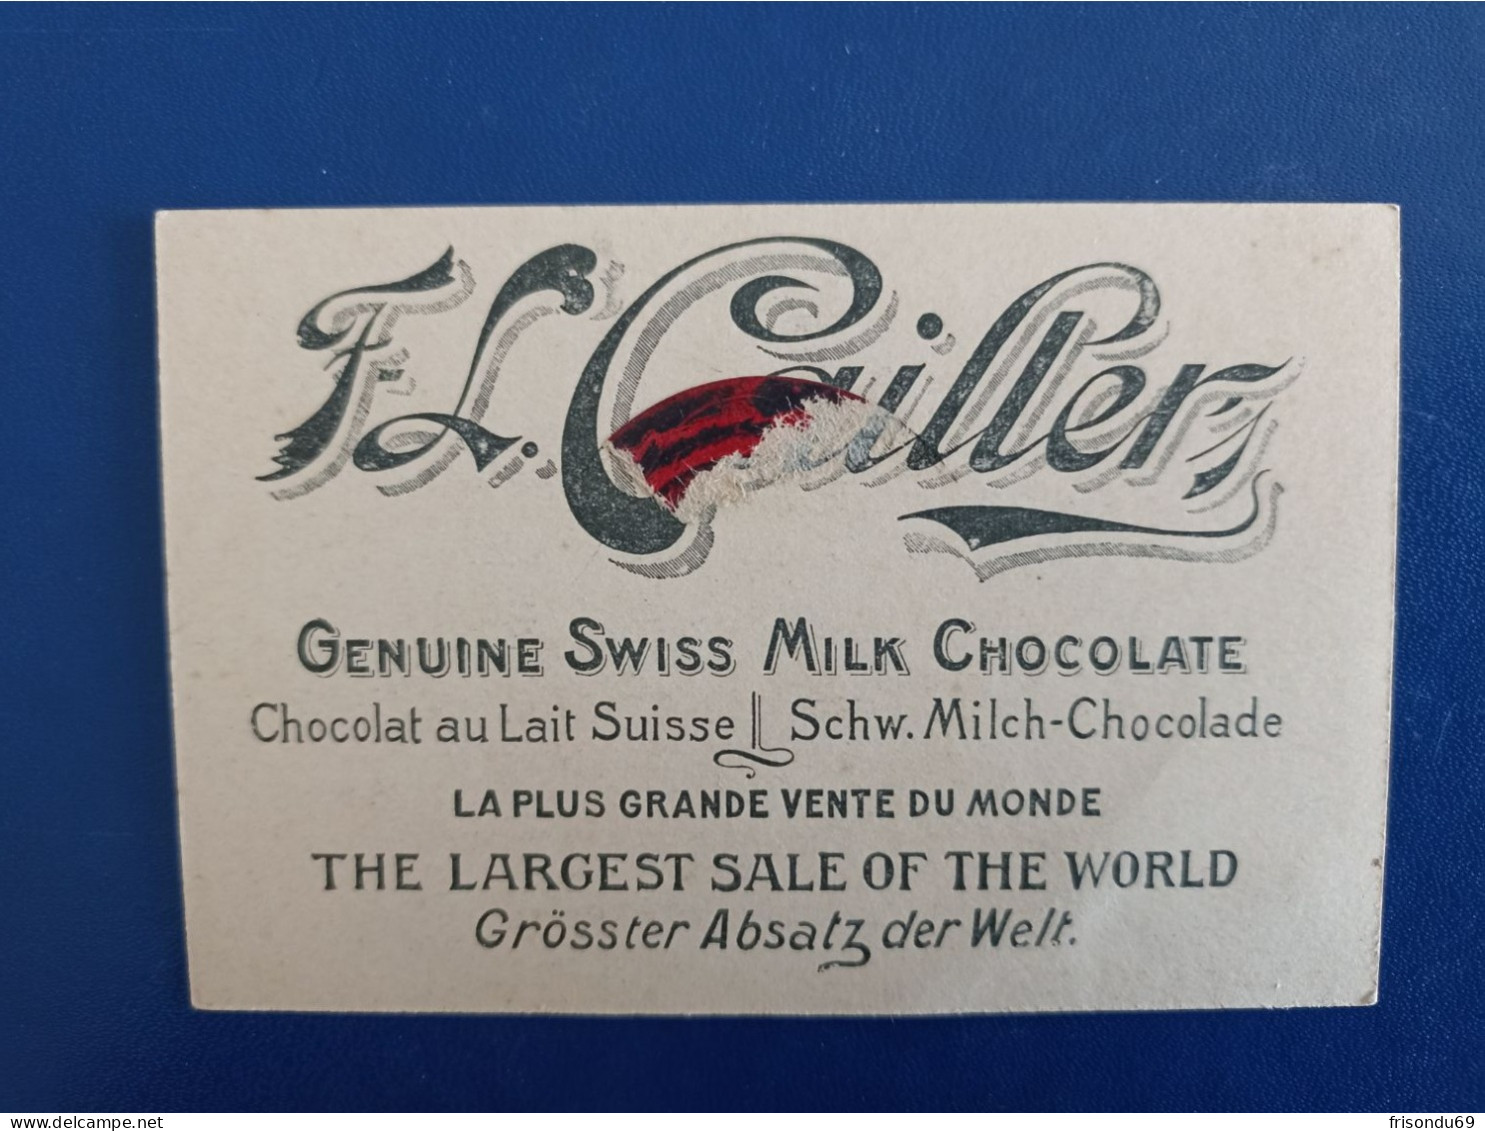 Genuine Swiss Milk Chocolate. - Advertising